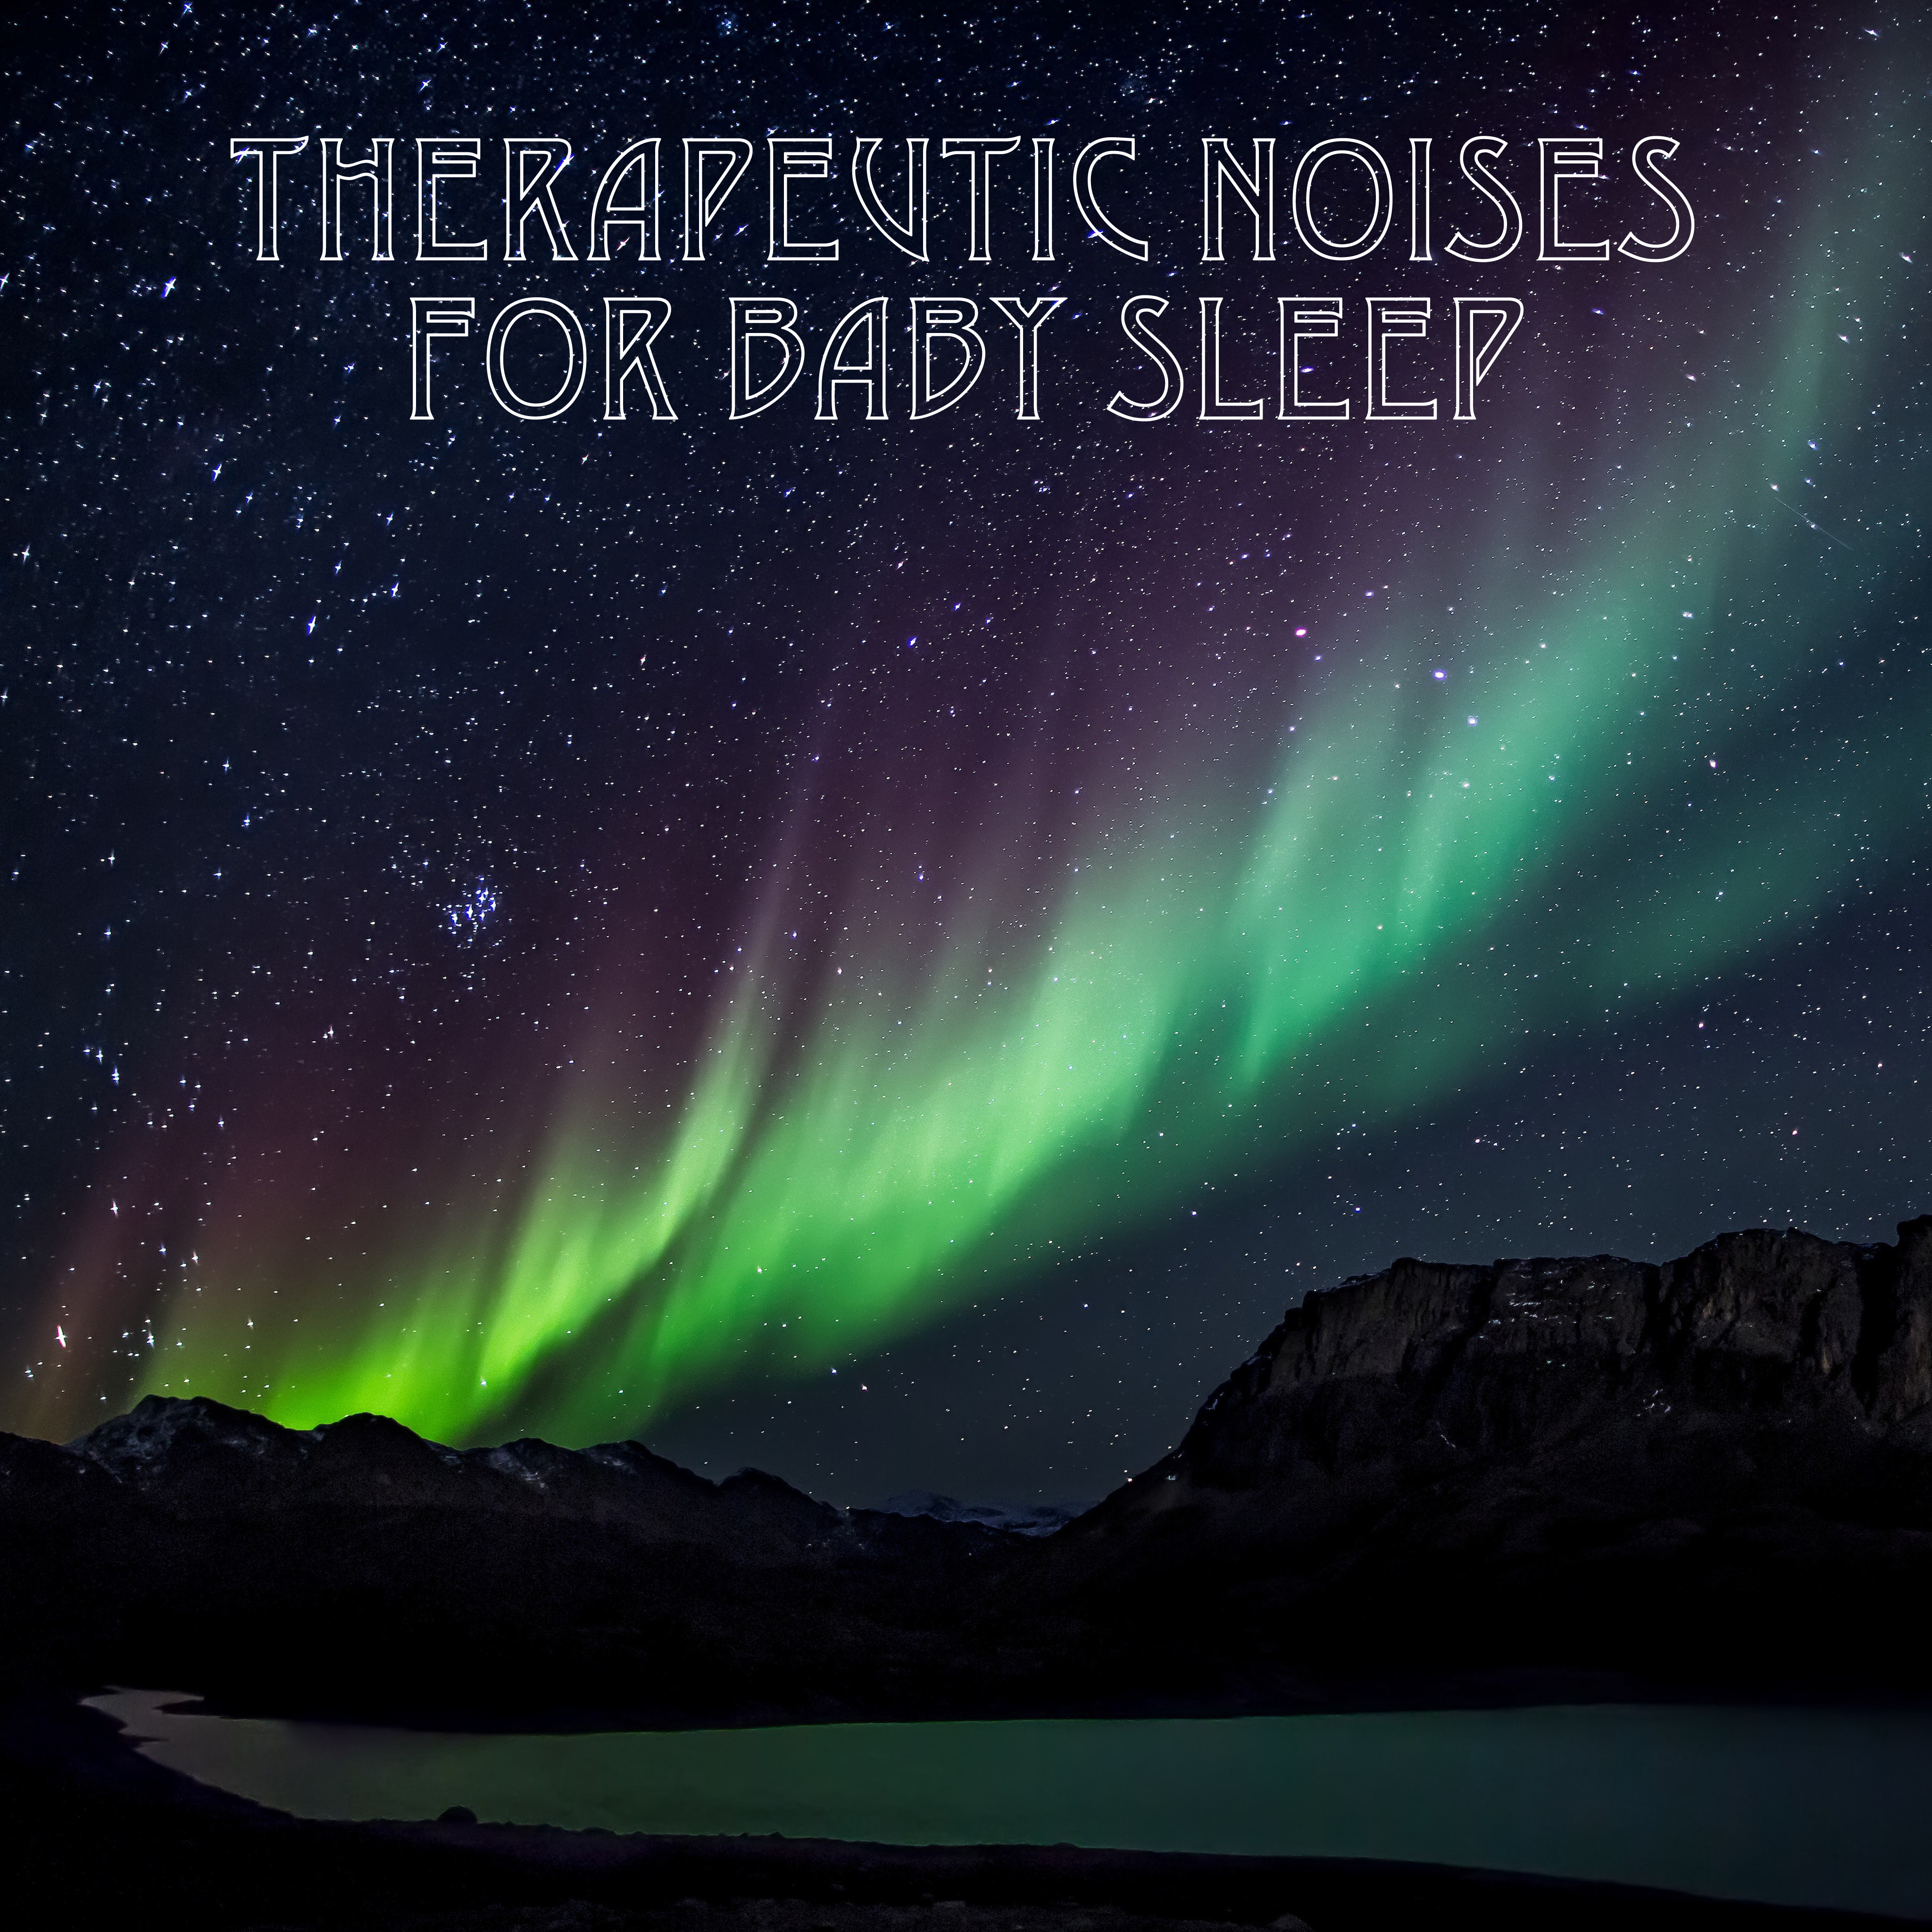 11 Therapeutic Noises for Baby Sleep